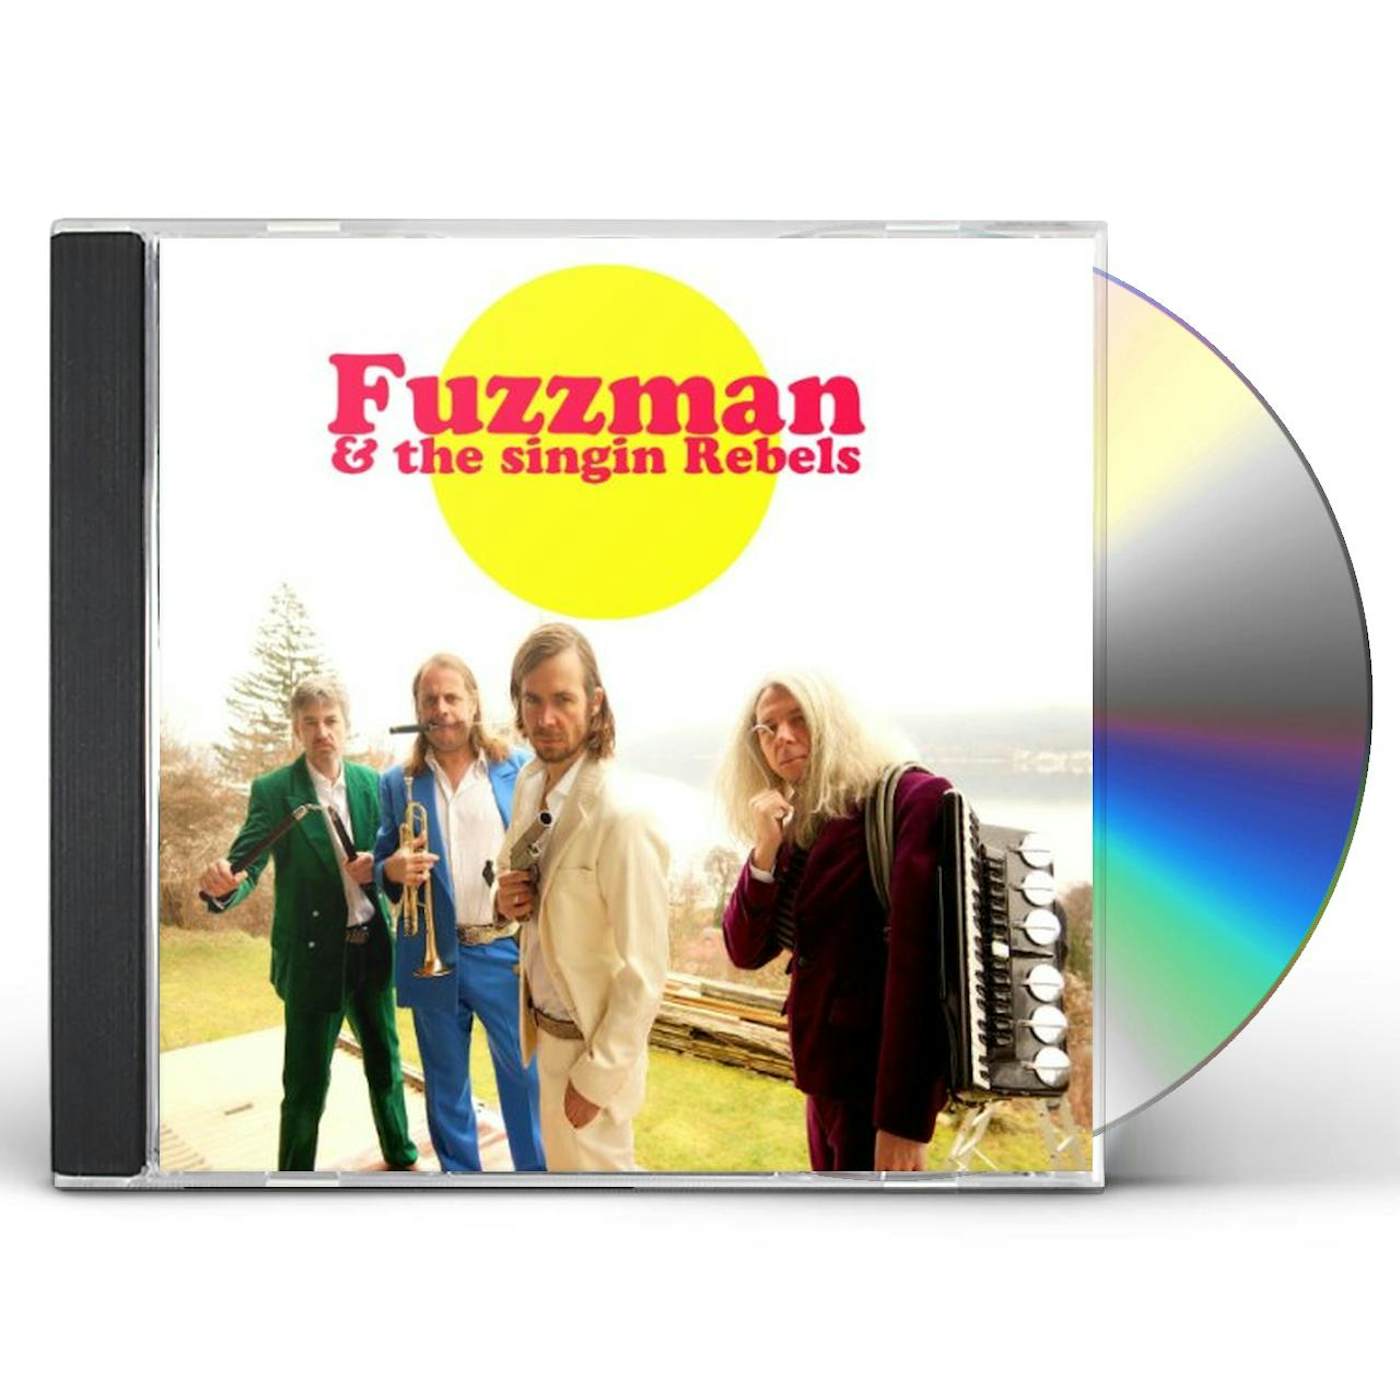 FUZZMAN & THE SINGIN REBELS CD